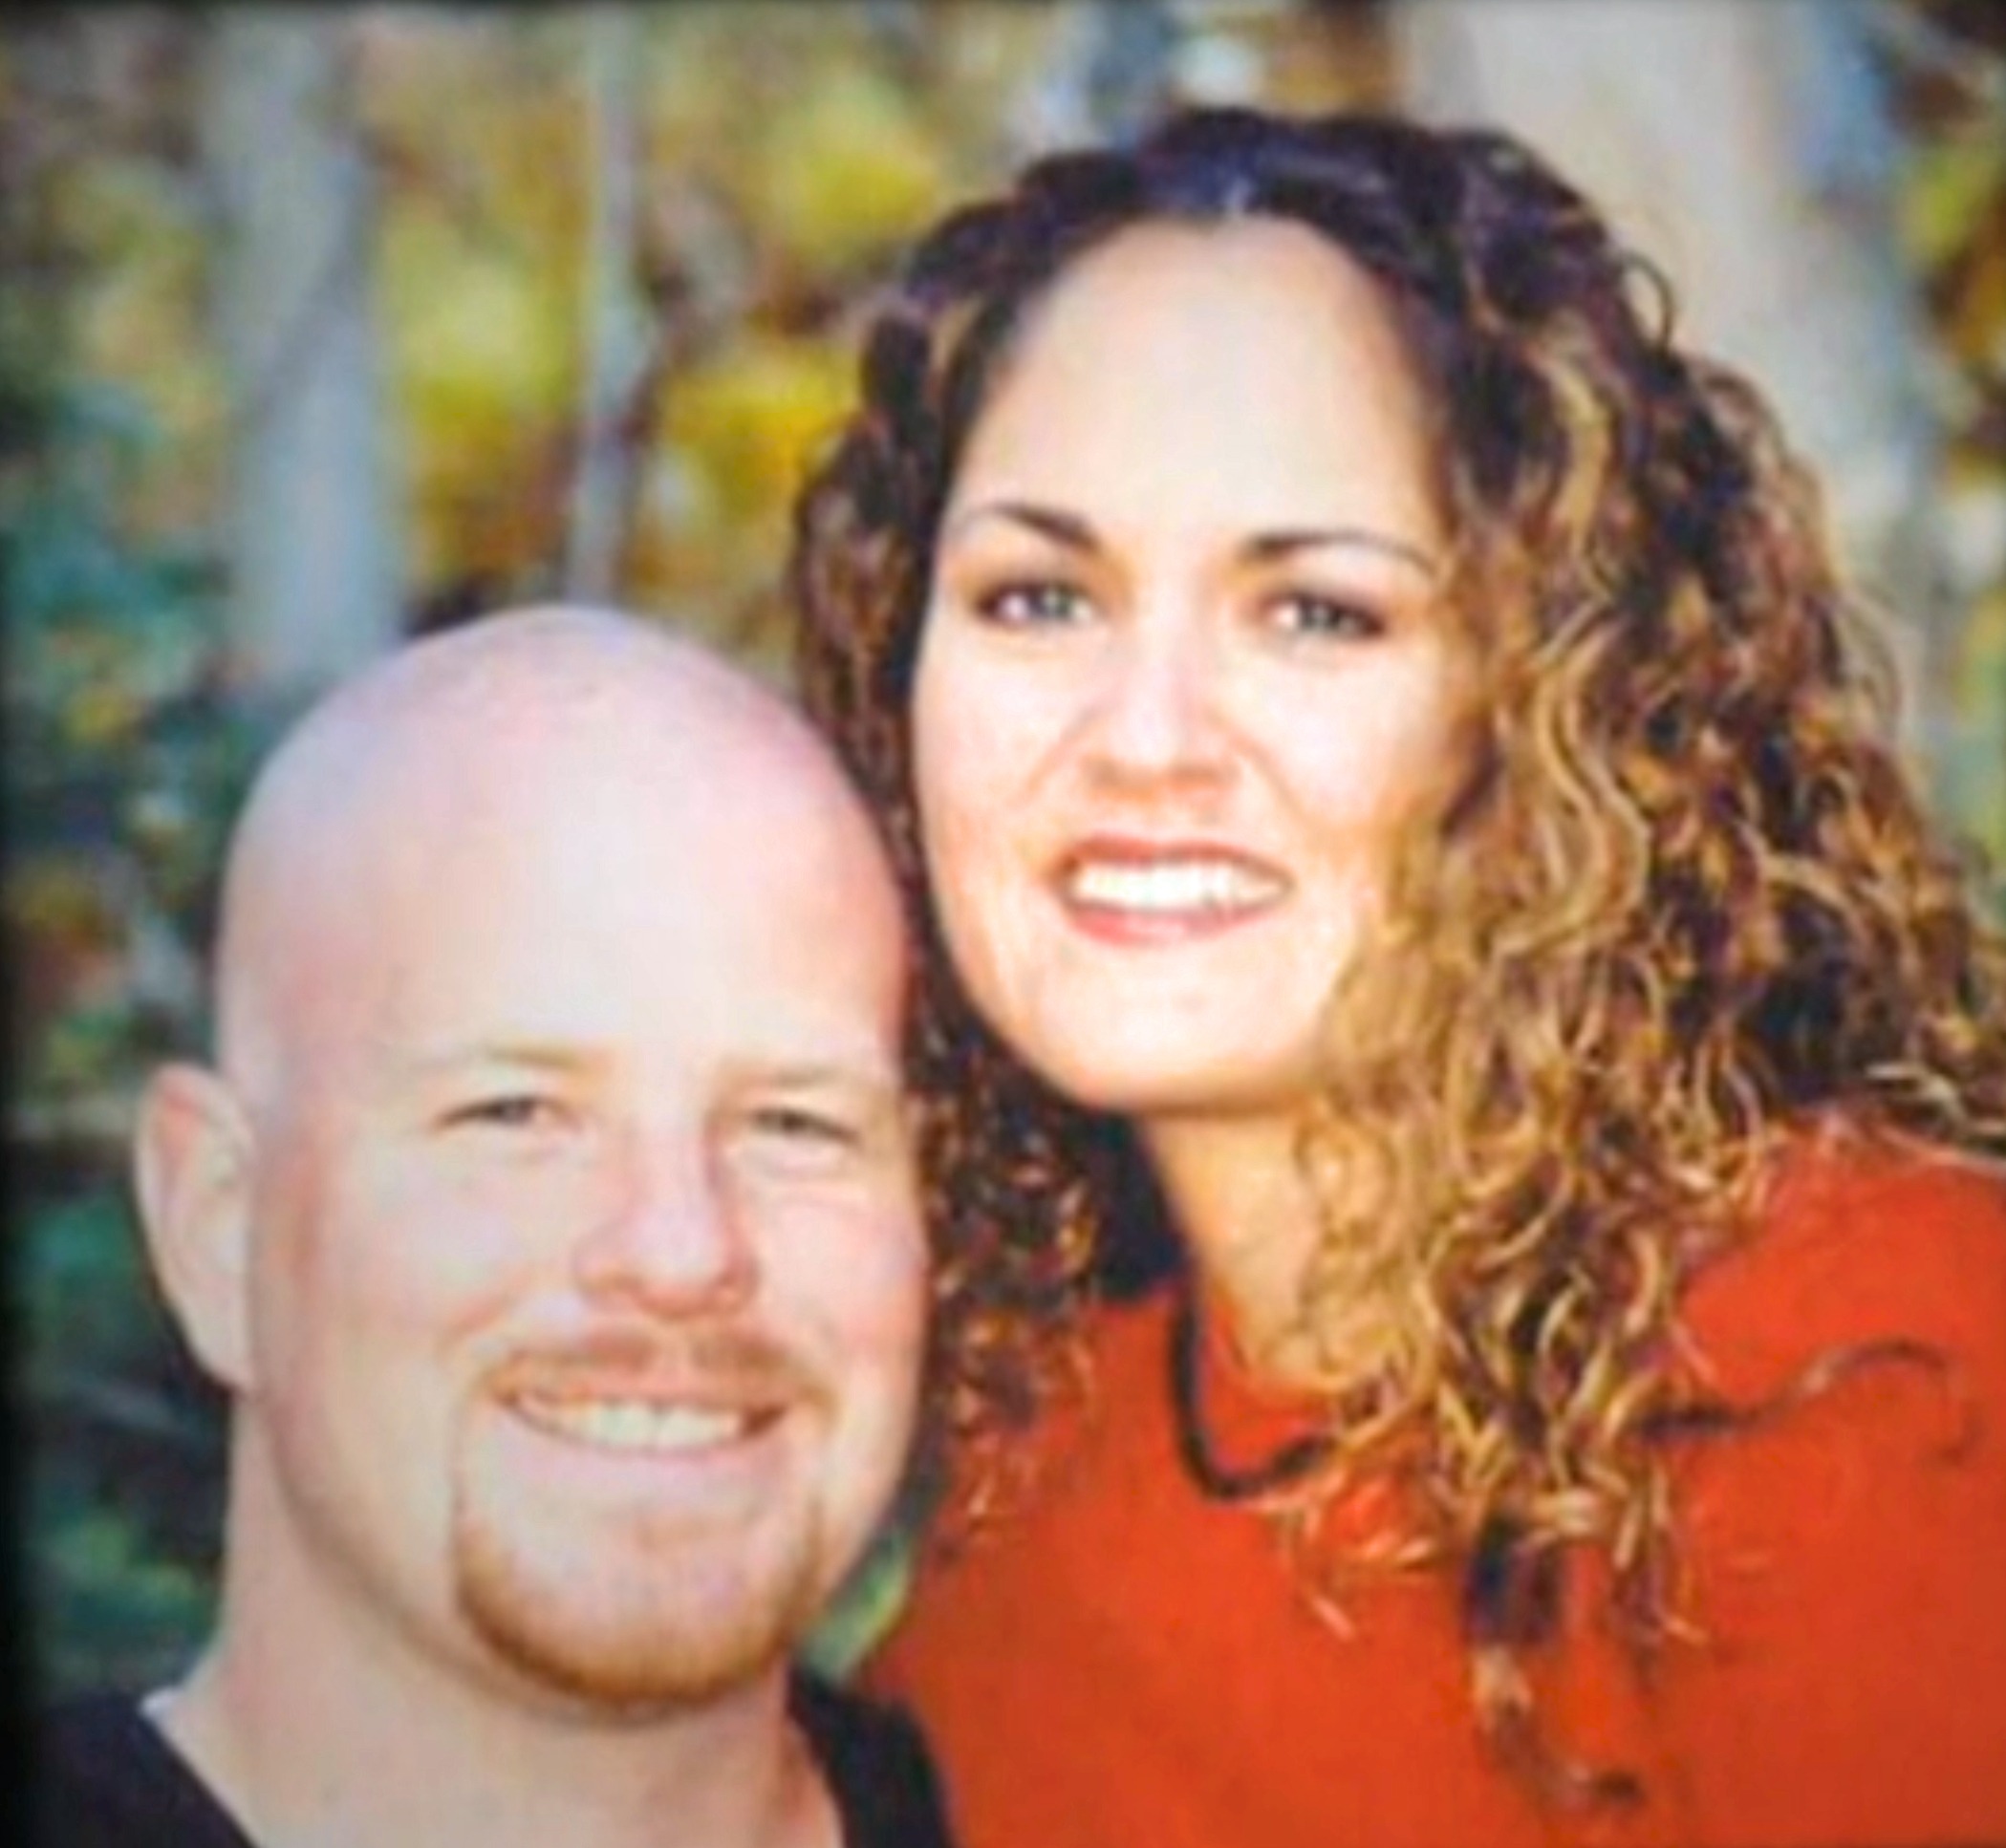 Lori Hacking's Murder - Fatally Deceived By Her Husband's Falsehoods